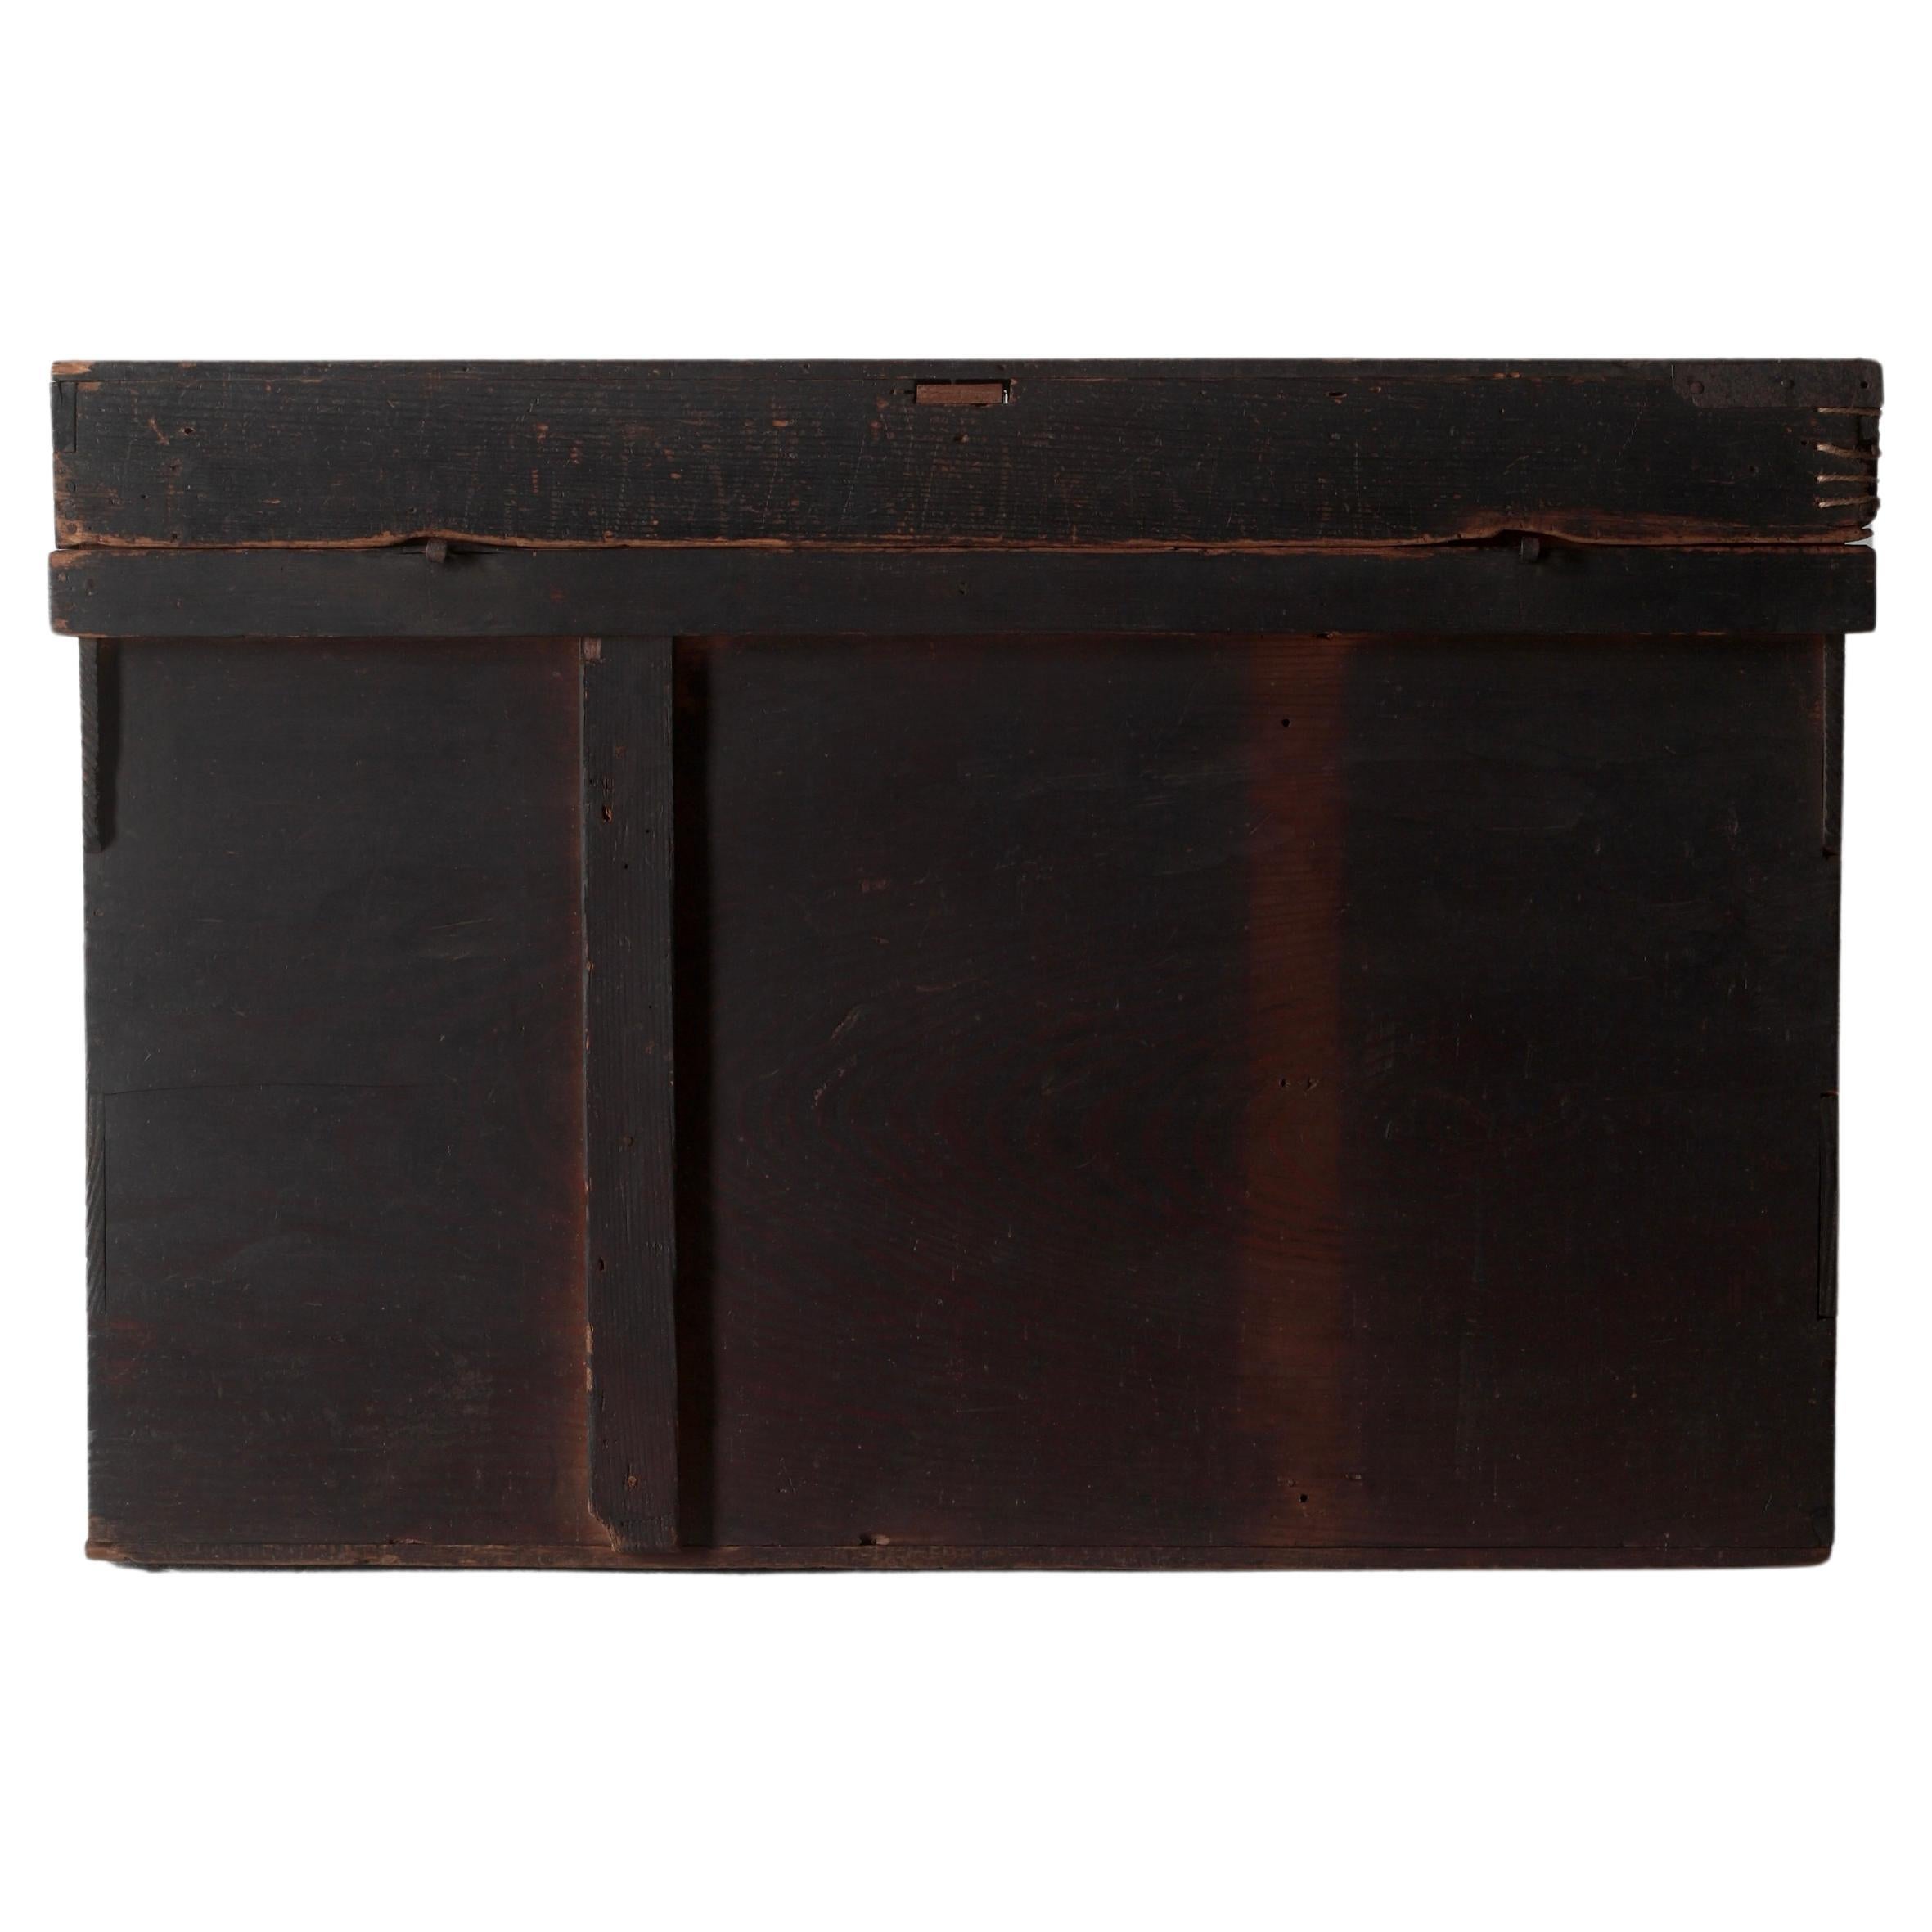 Japanese Antique Black Wooden Box / Storage Sofa Table / 1868-1912s WabiSabi